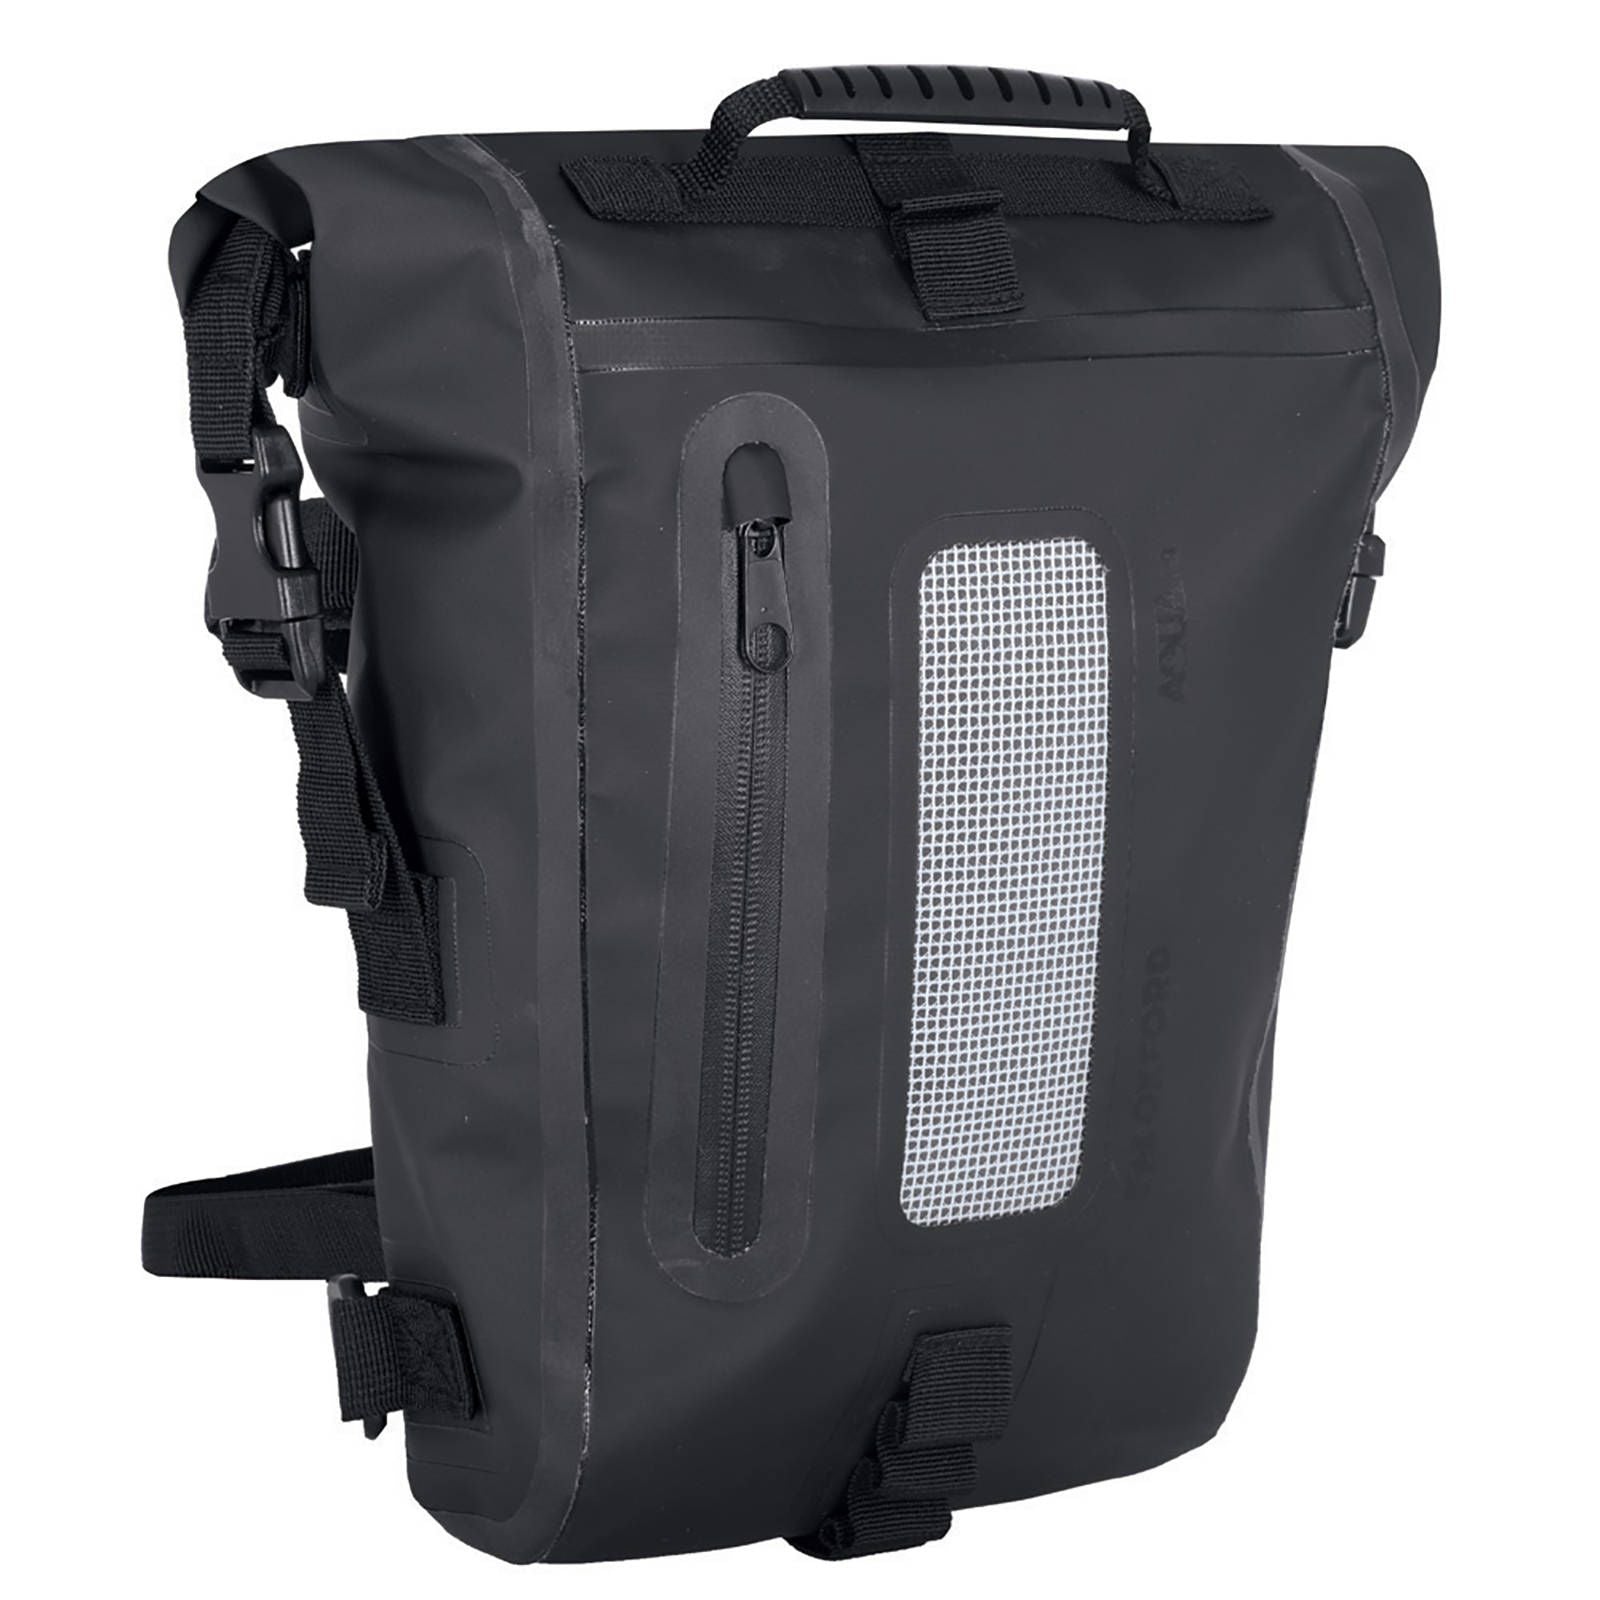 New OXFORD Aqua Tail Bag T8 - Black #OXOL455